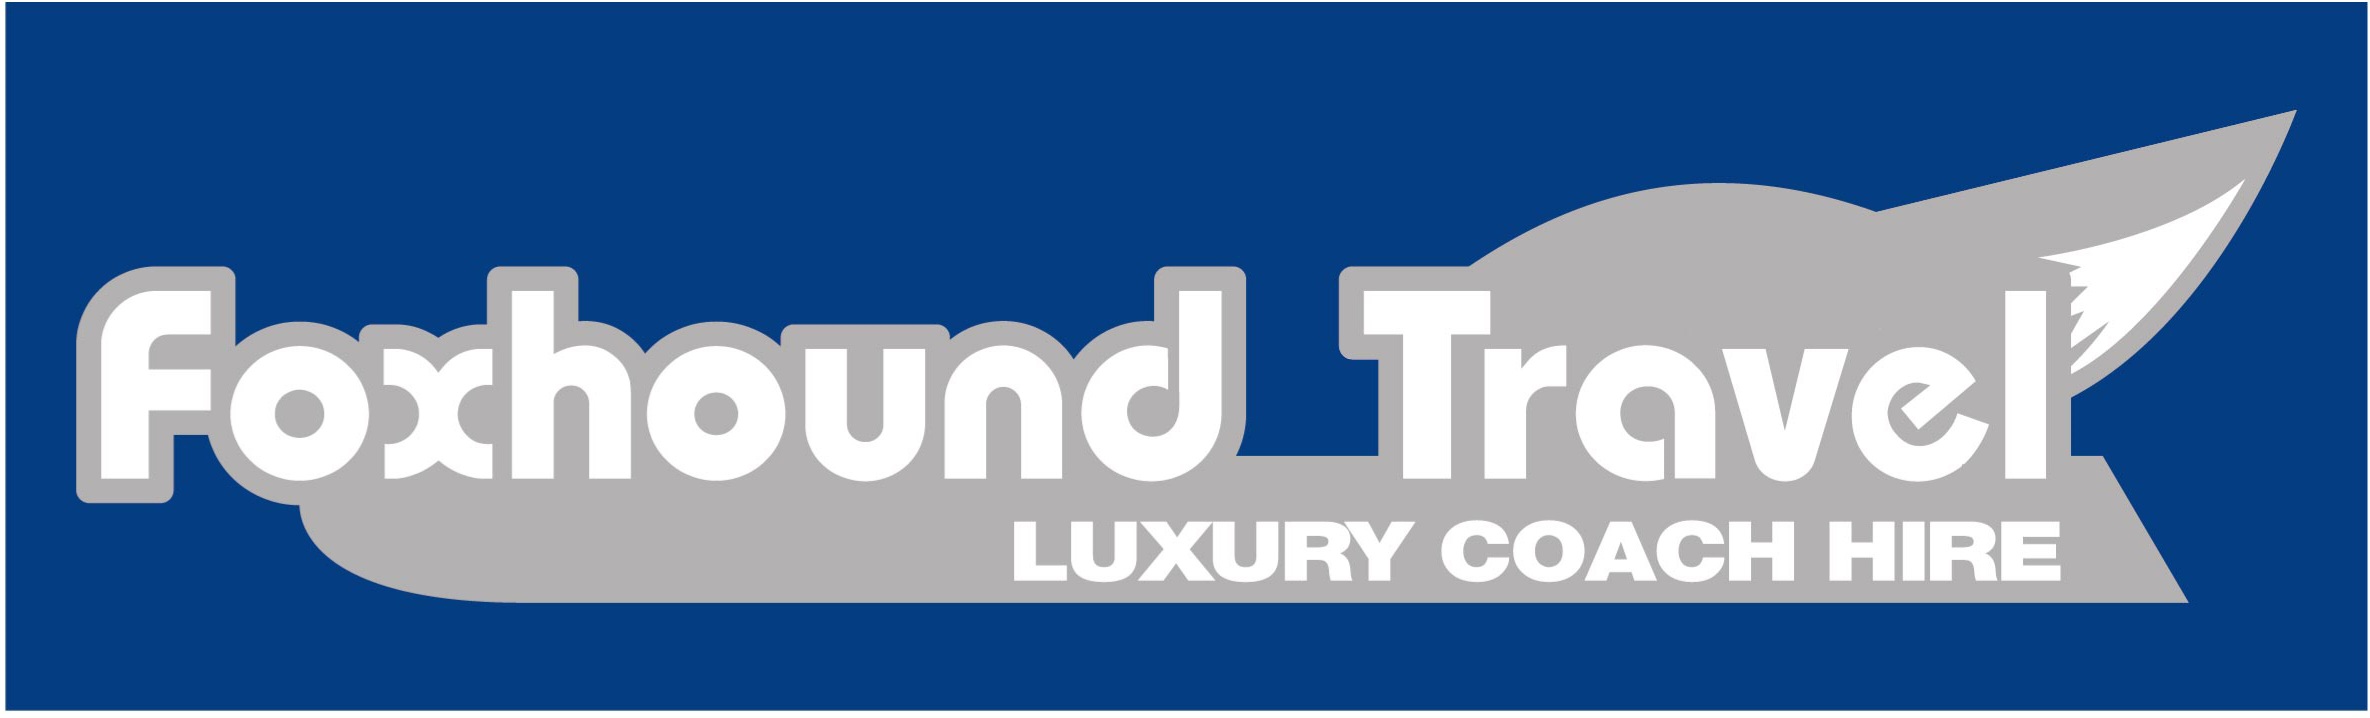 Foxhound Travel - Luxury coach hire